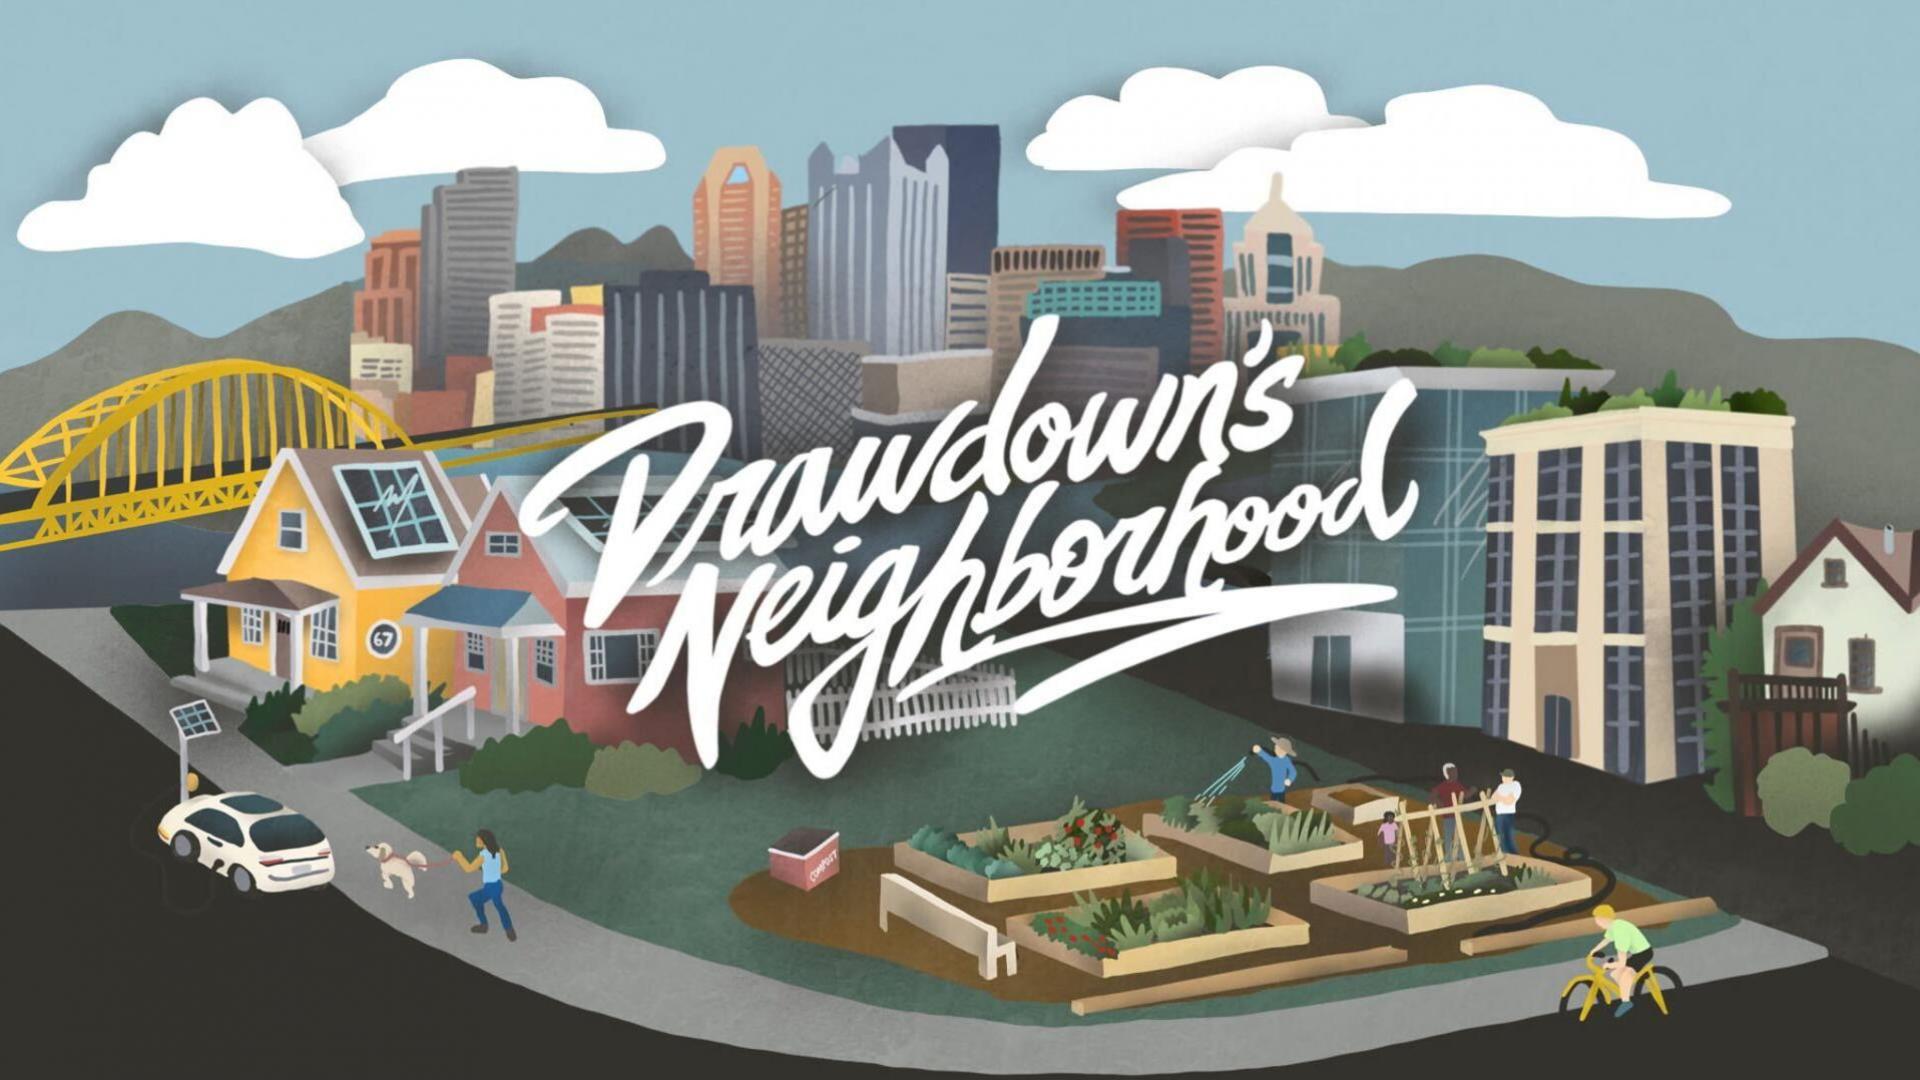 Drawdown’s Neighborhood logo